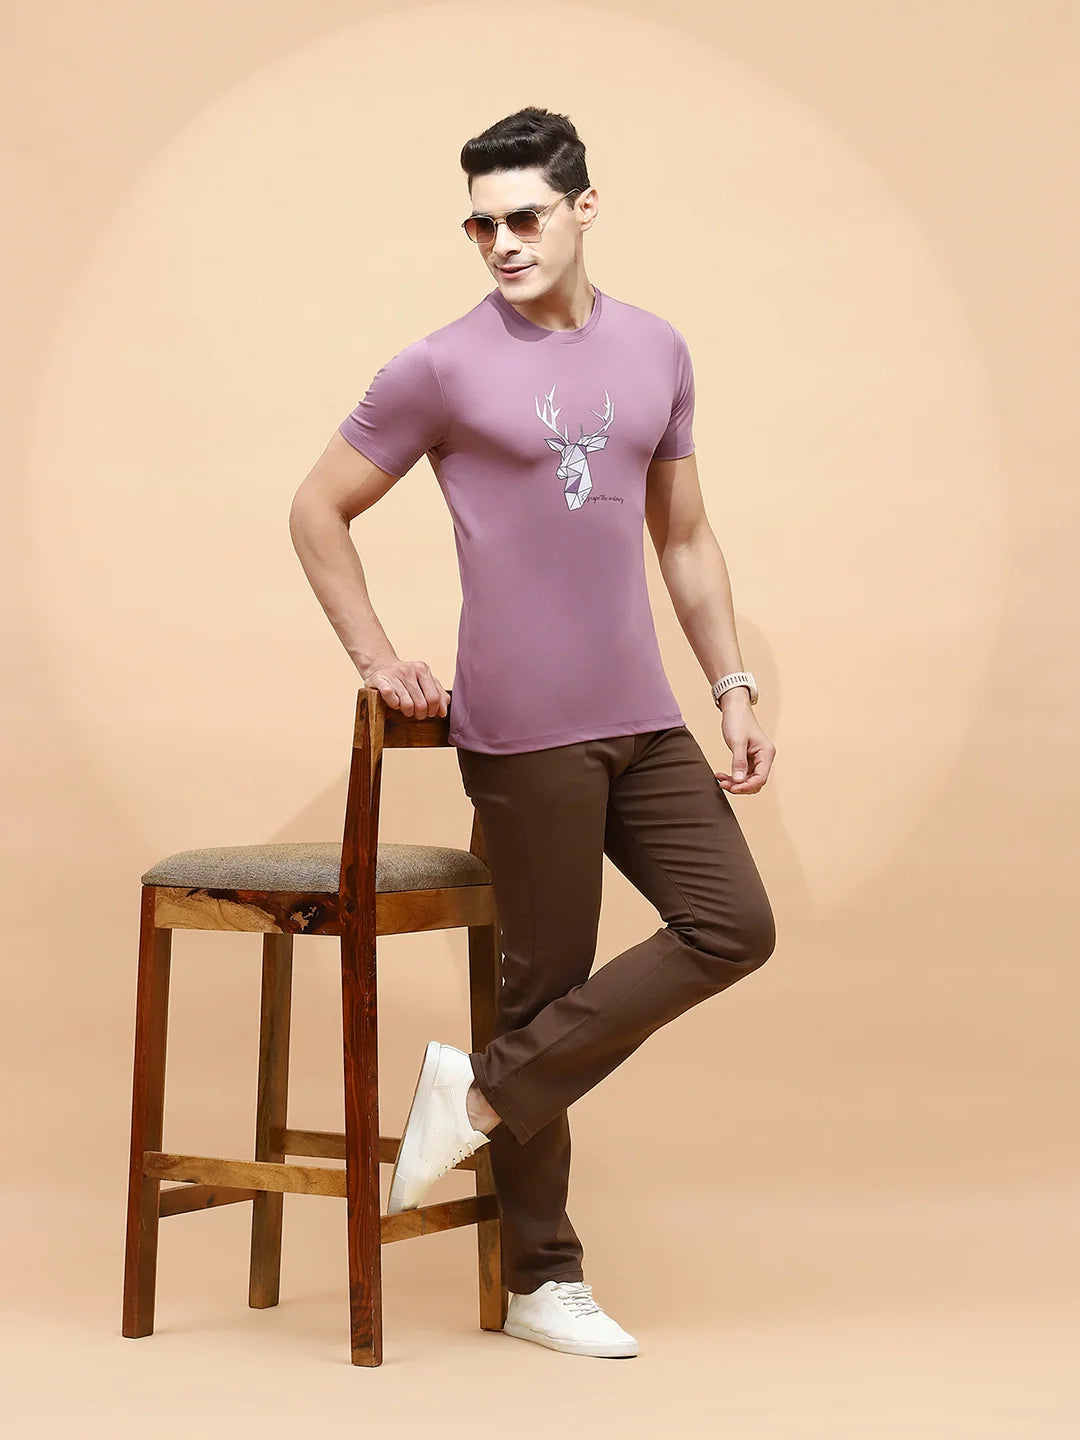 Mauve Viscose Blend Regular Fit T-Shirt For Men